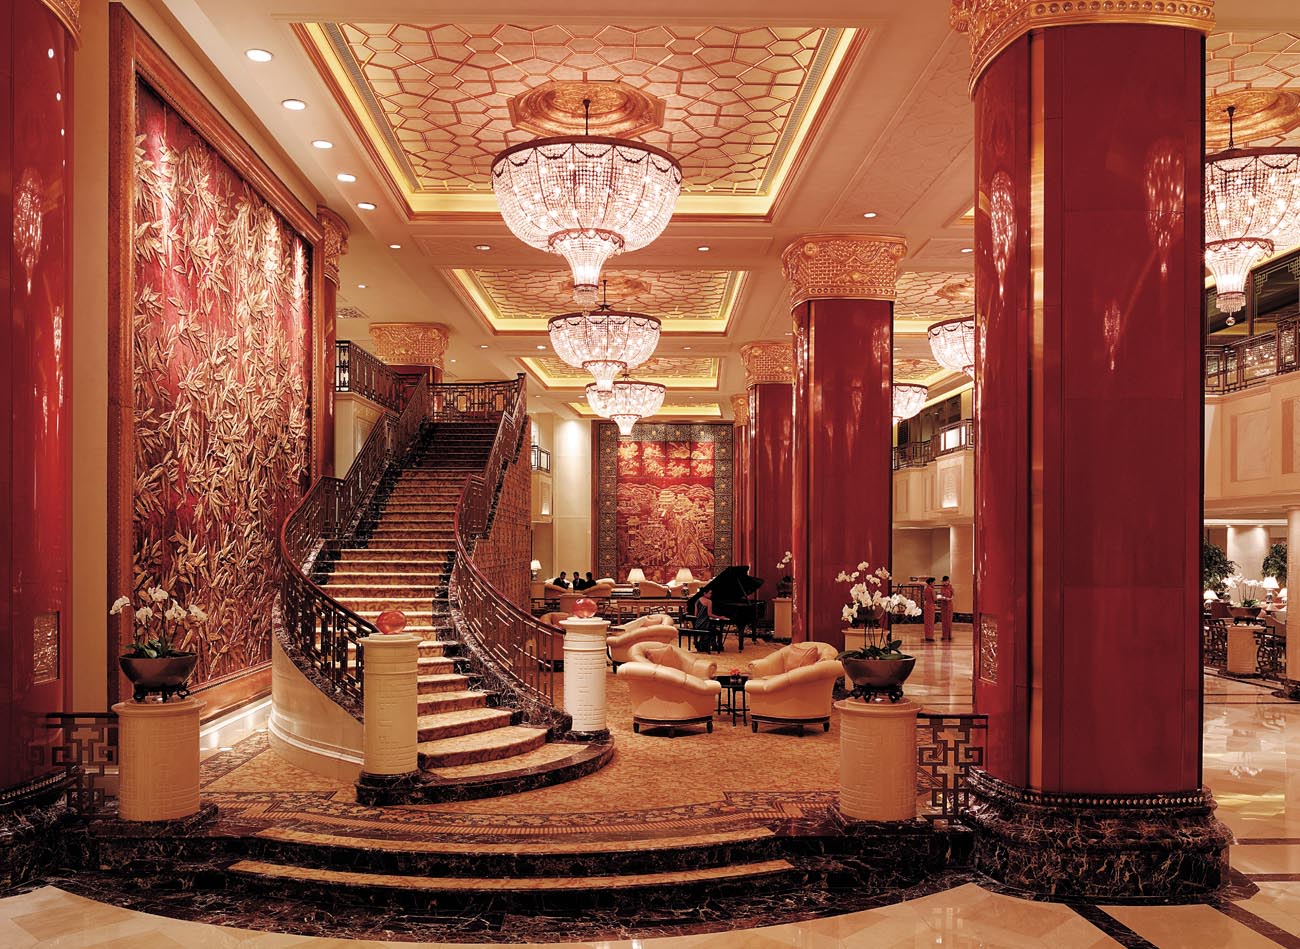 The majestic lobby of the Shangri-La China World Hotel in Beijing; photo: courtesy of Shangri-La